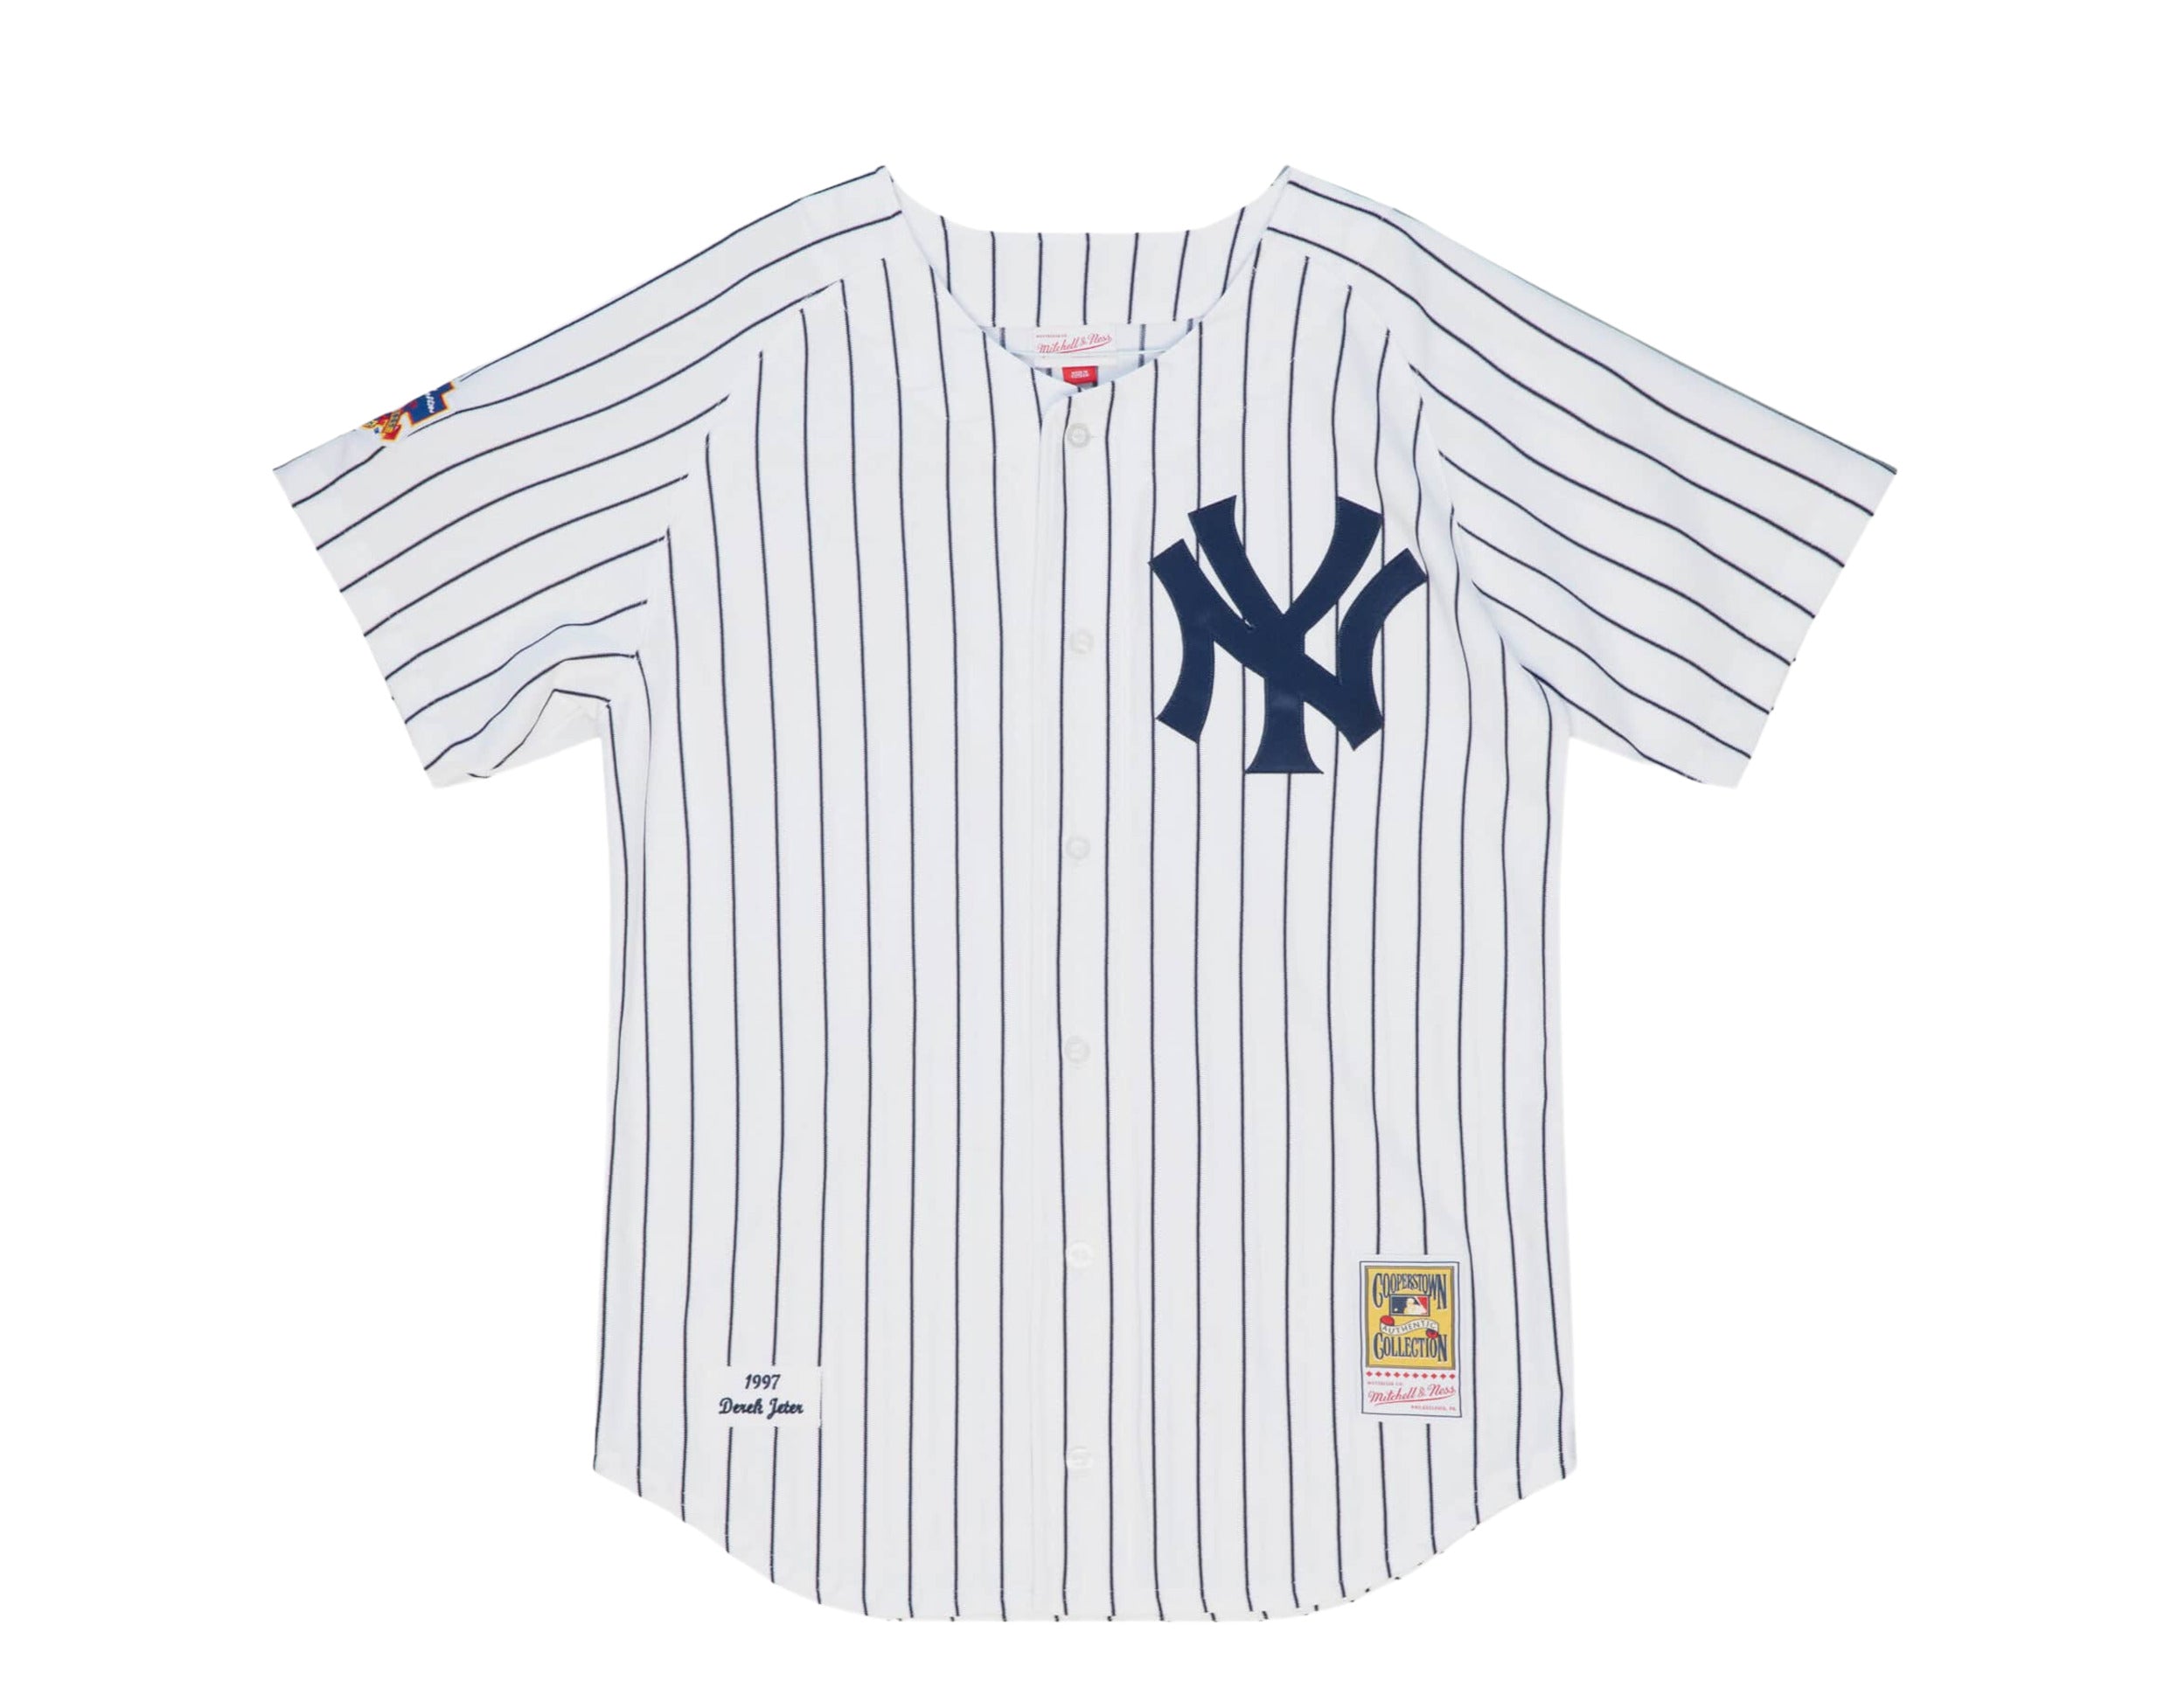 Derek Jeter New York Yankees Baseball Jersey Mens 2XL for Sale